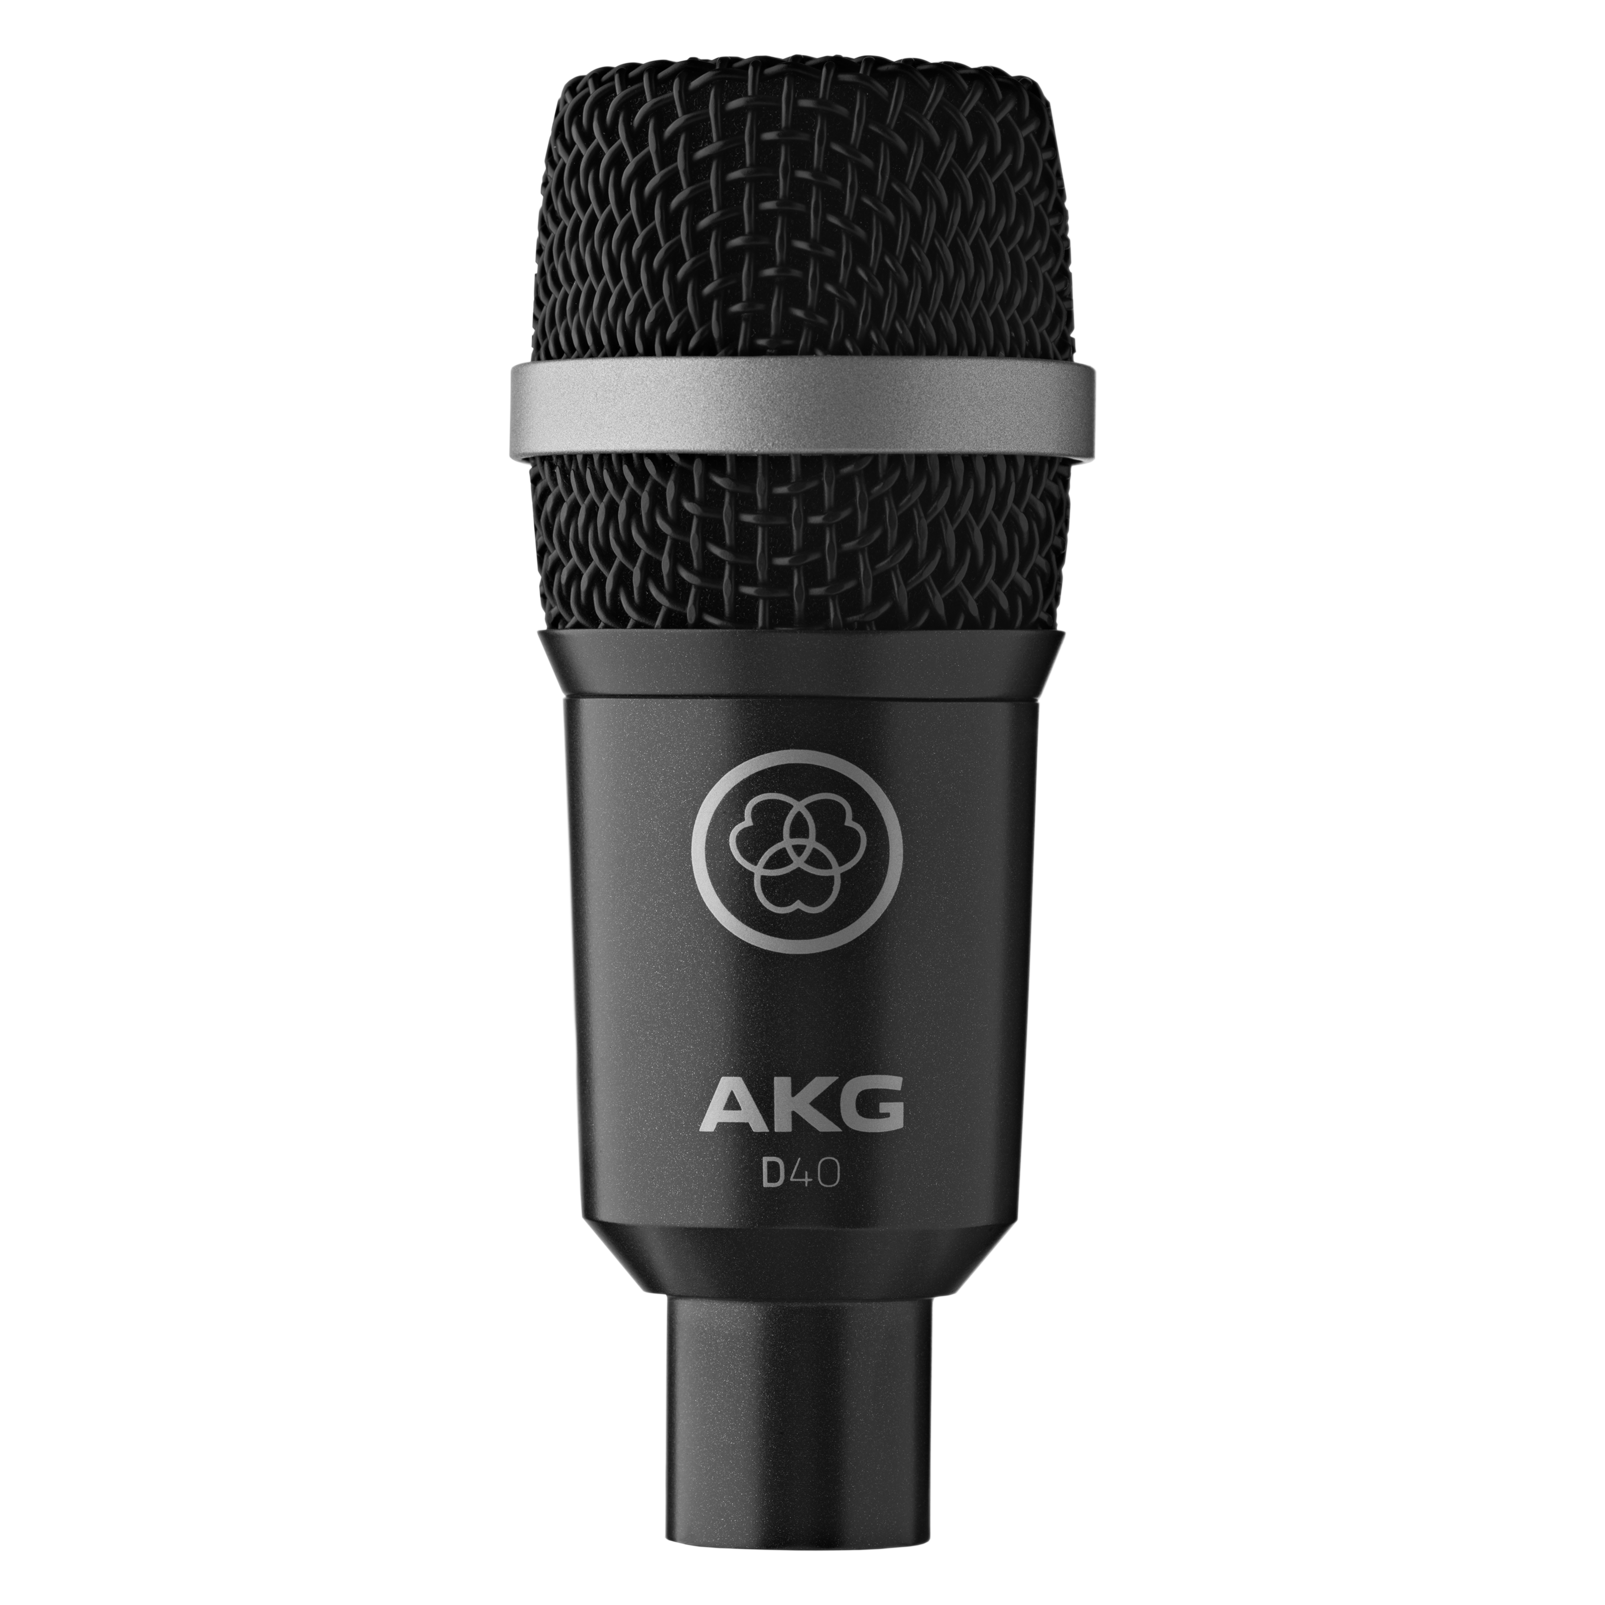 D40 - Black - Professional dynamic instrument microphone - Hero